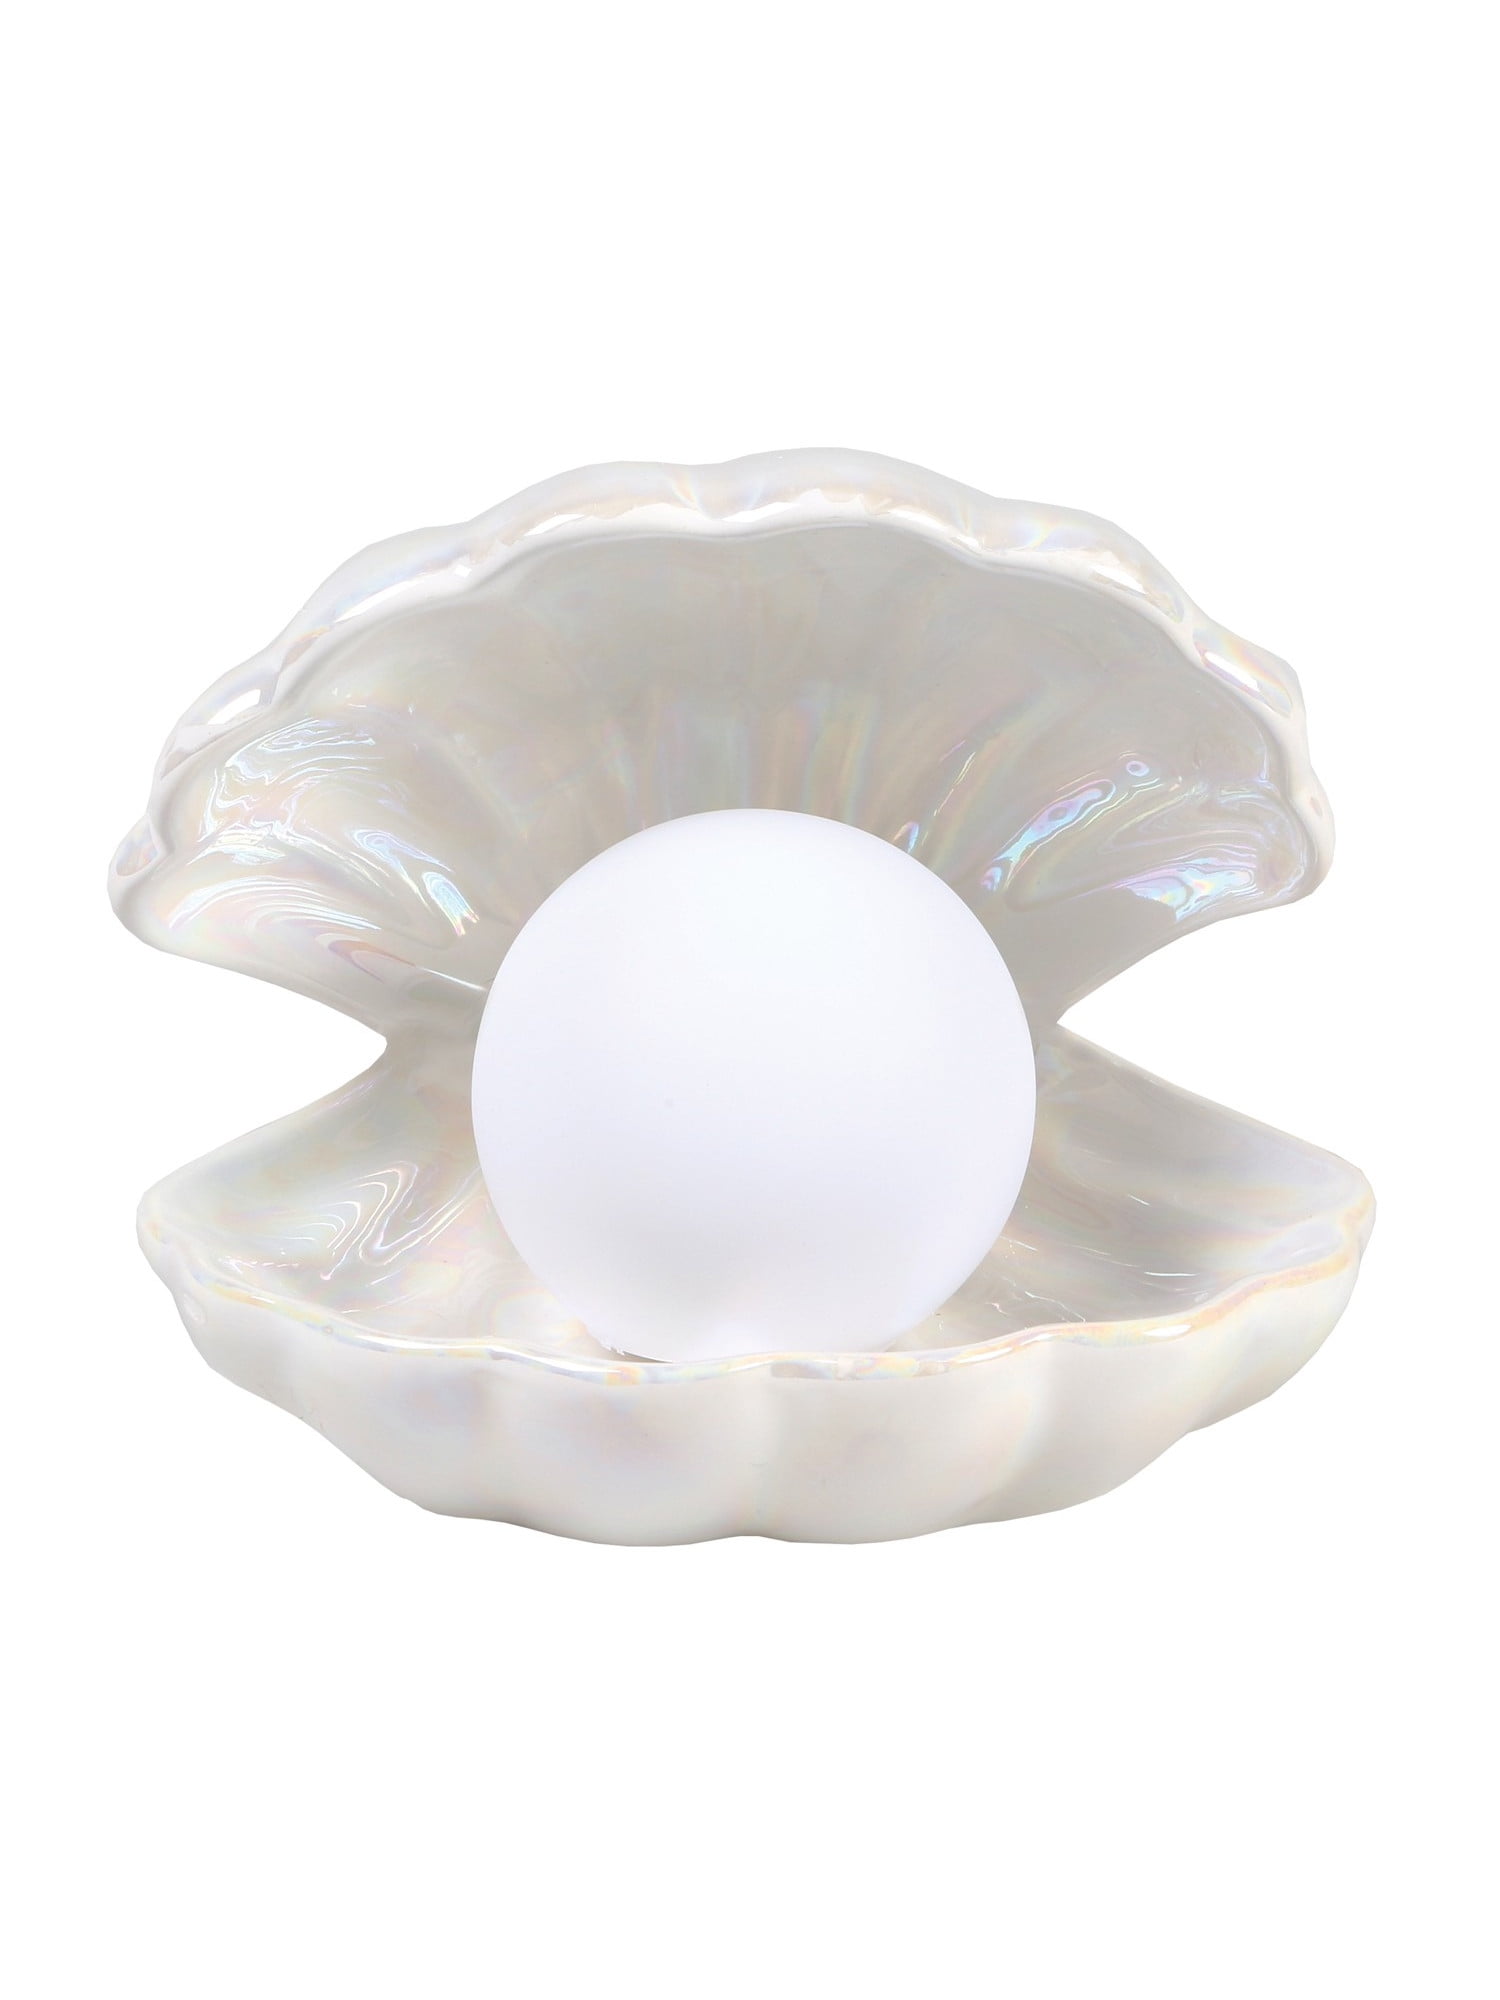 Shell Pearl Design Table Lamp Desktop Light Night Lamp Decorative Bedside Lamp 